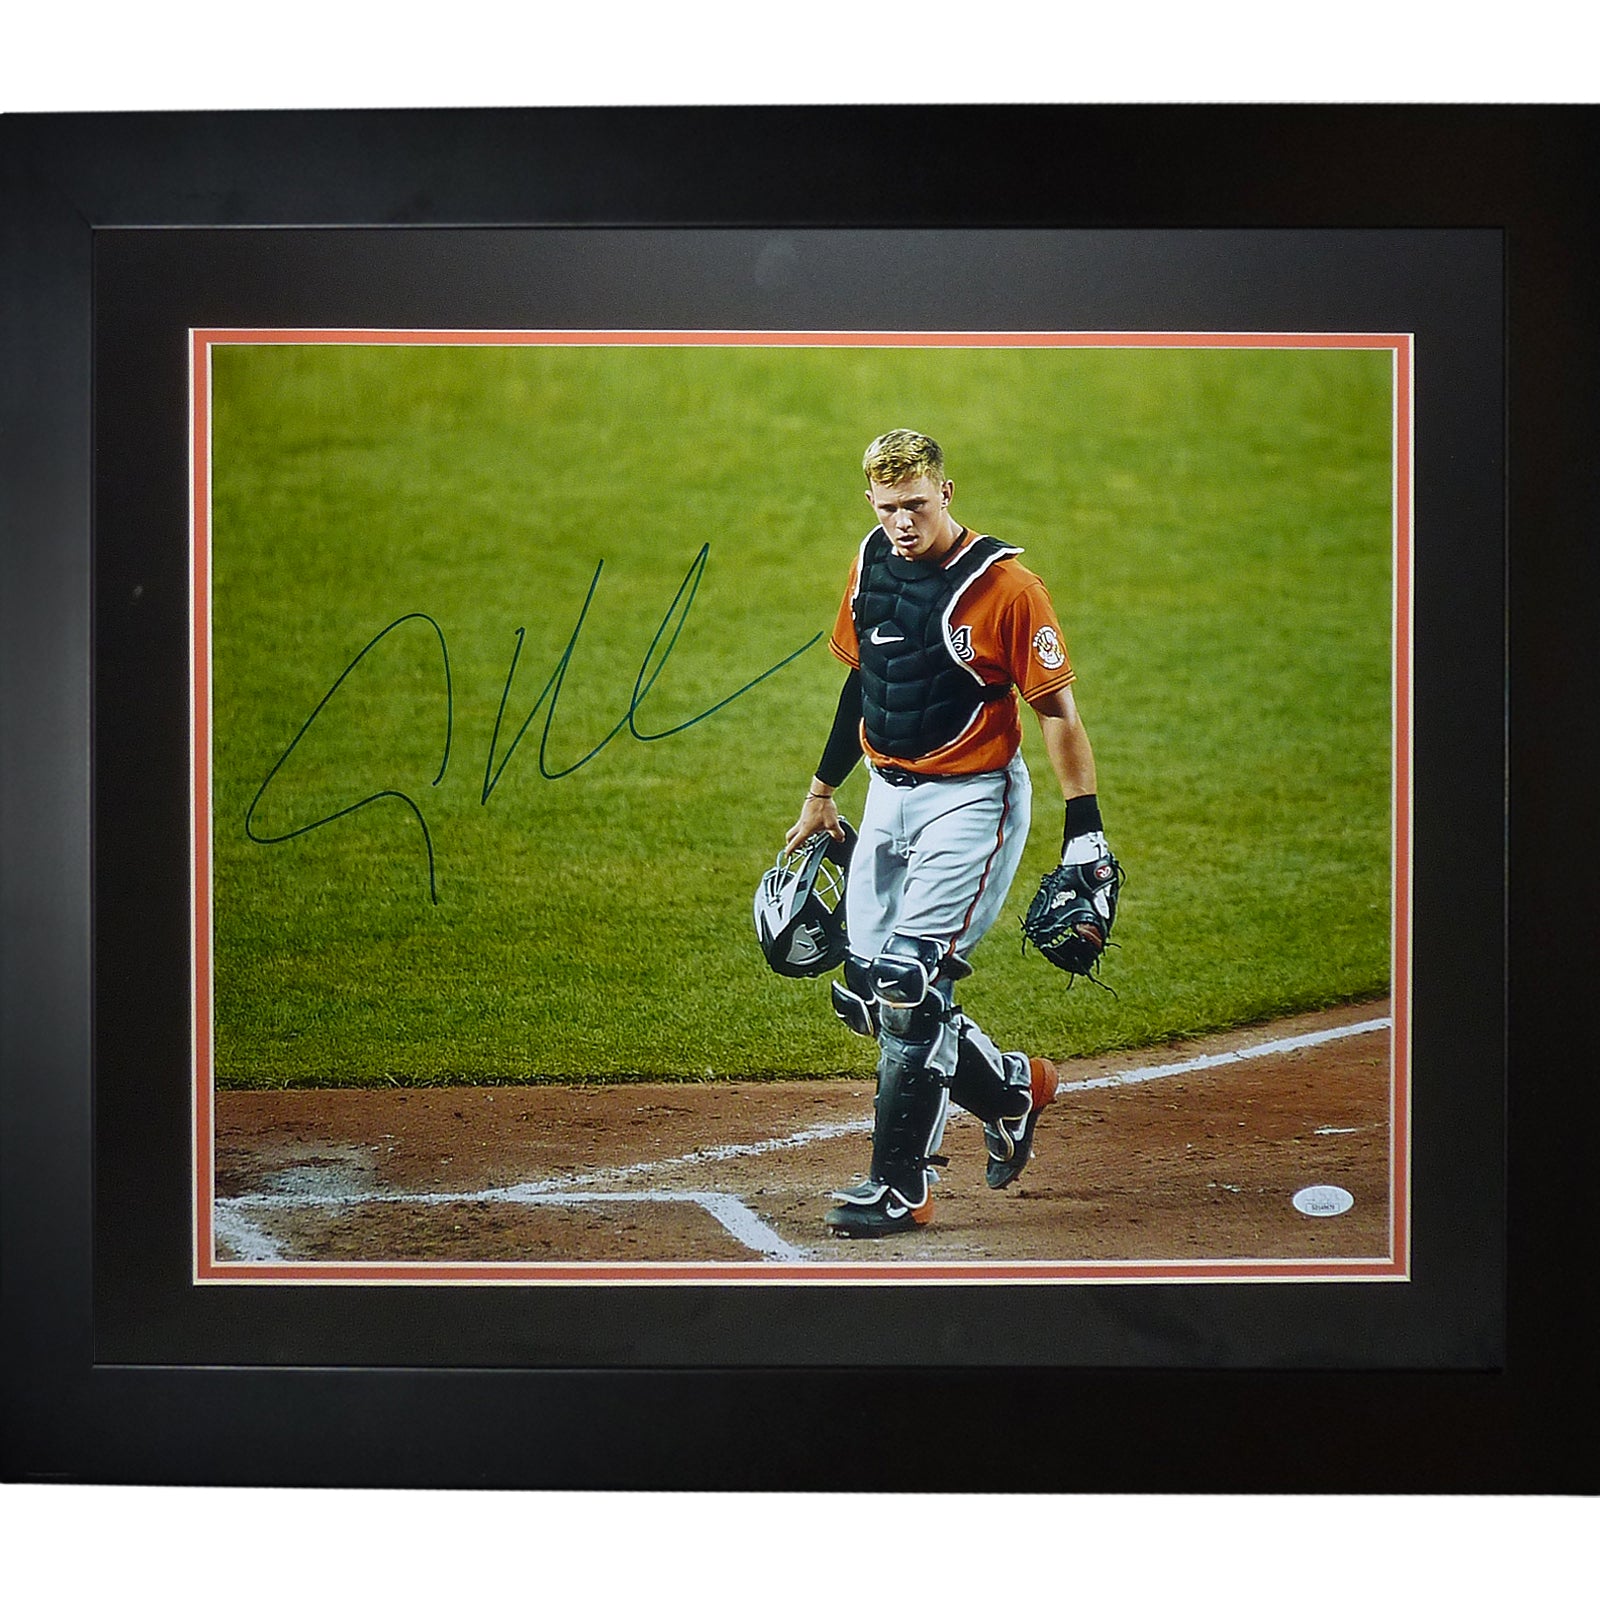 Adley Rutschman Autographed Baltimore Orioles Deluxe Framed 16x20 Photo - JSA